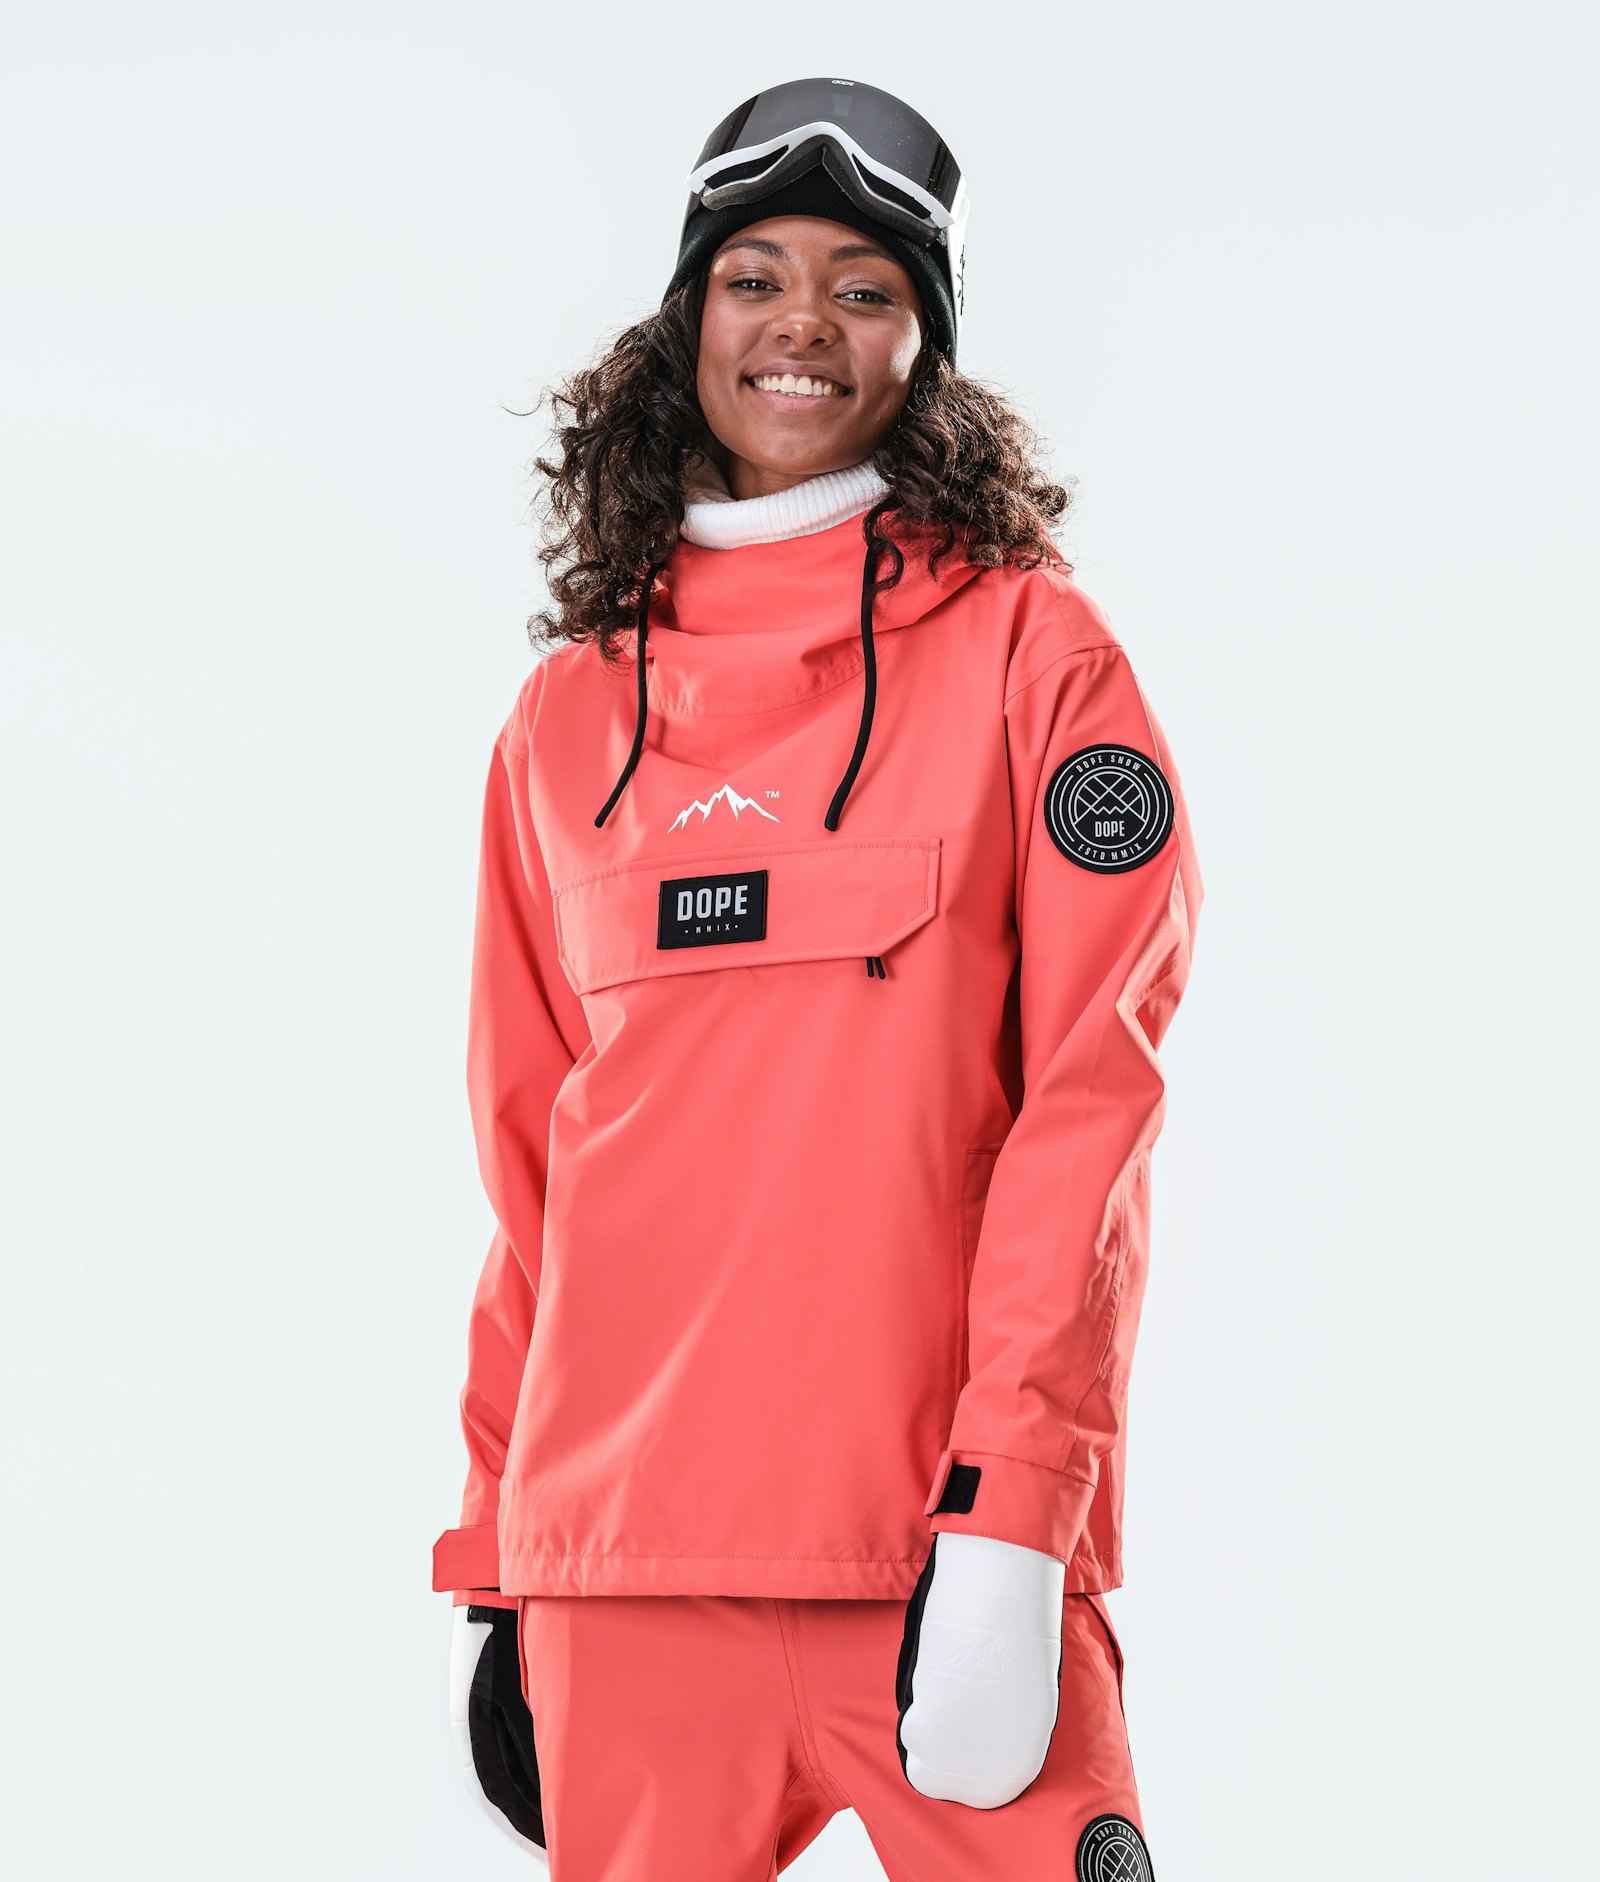 Dope Blizzard W 2020 Ski Jacket Women Coral